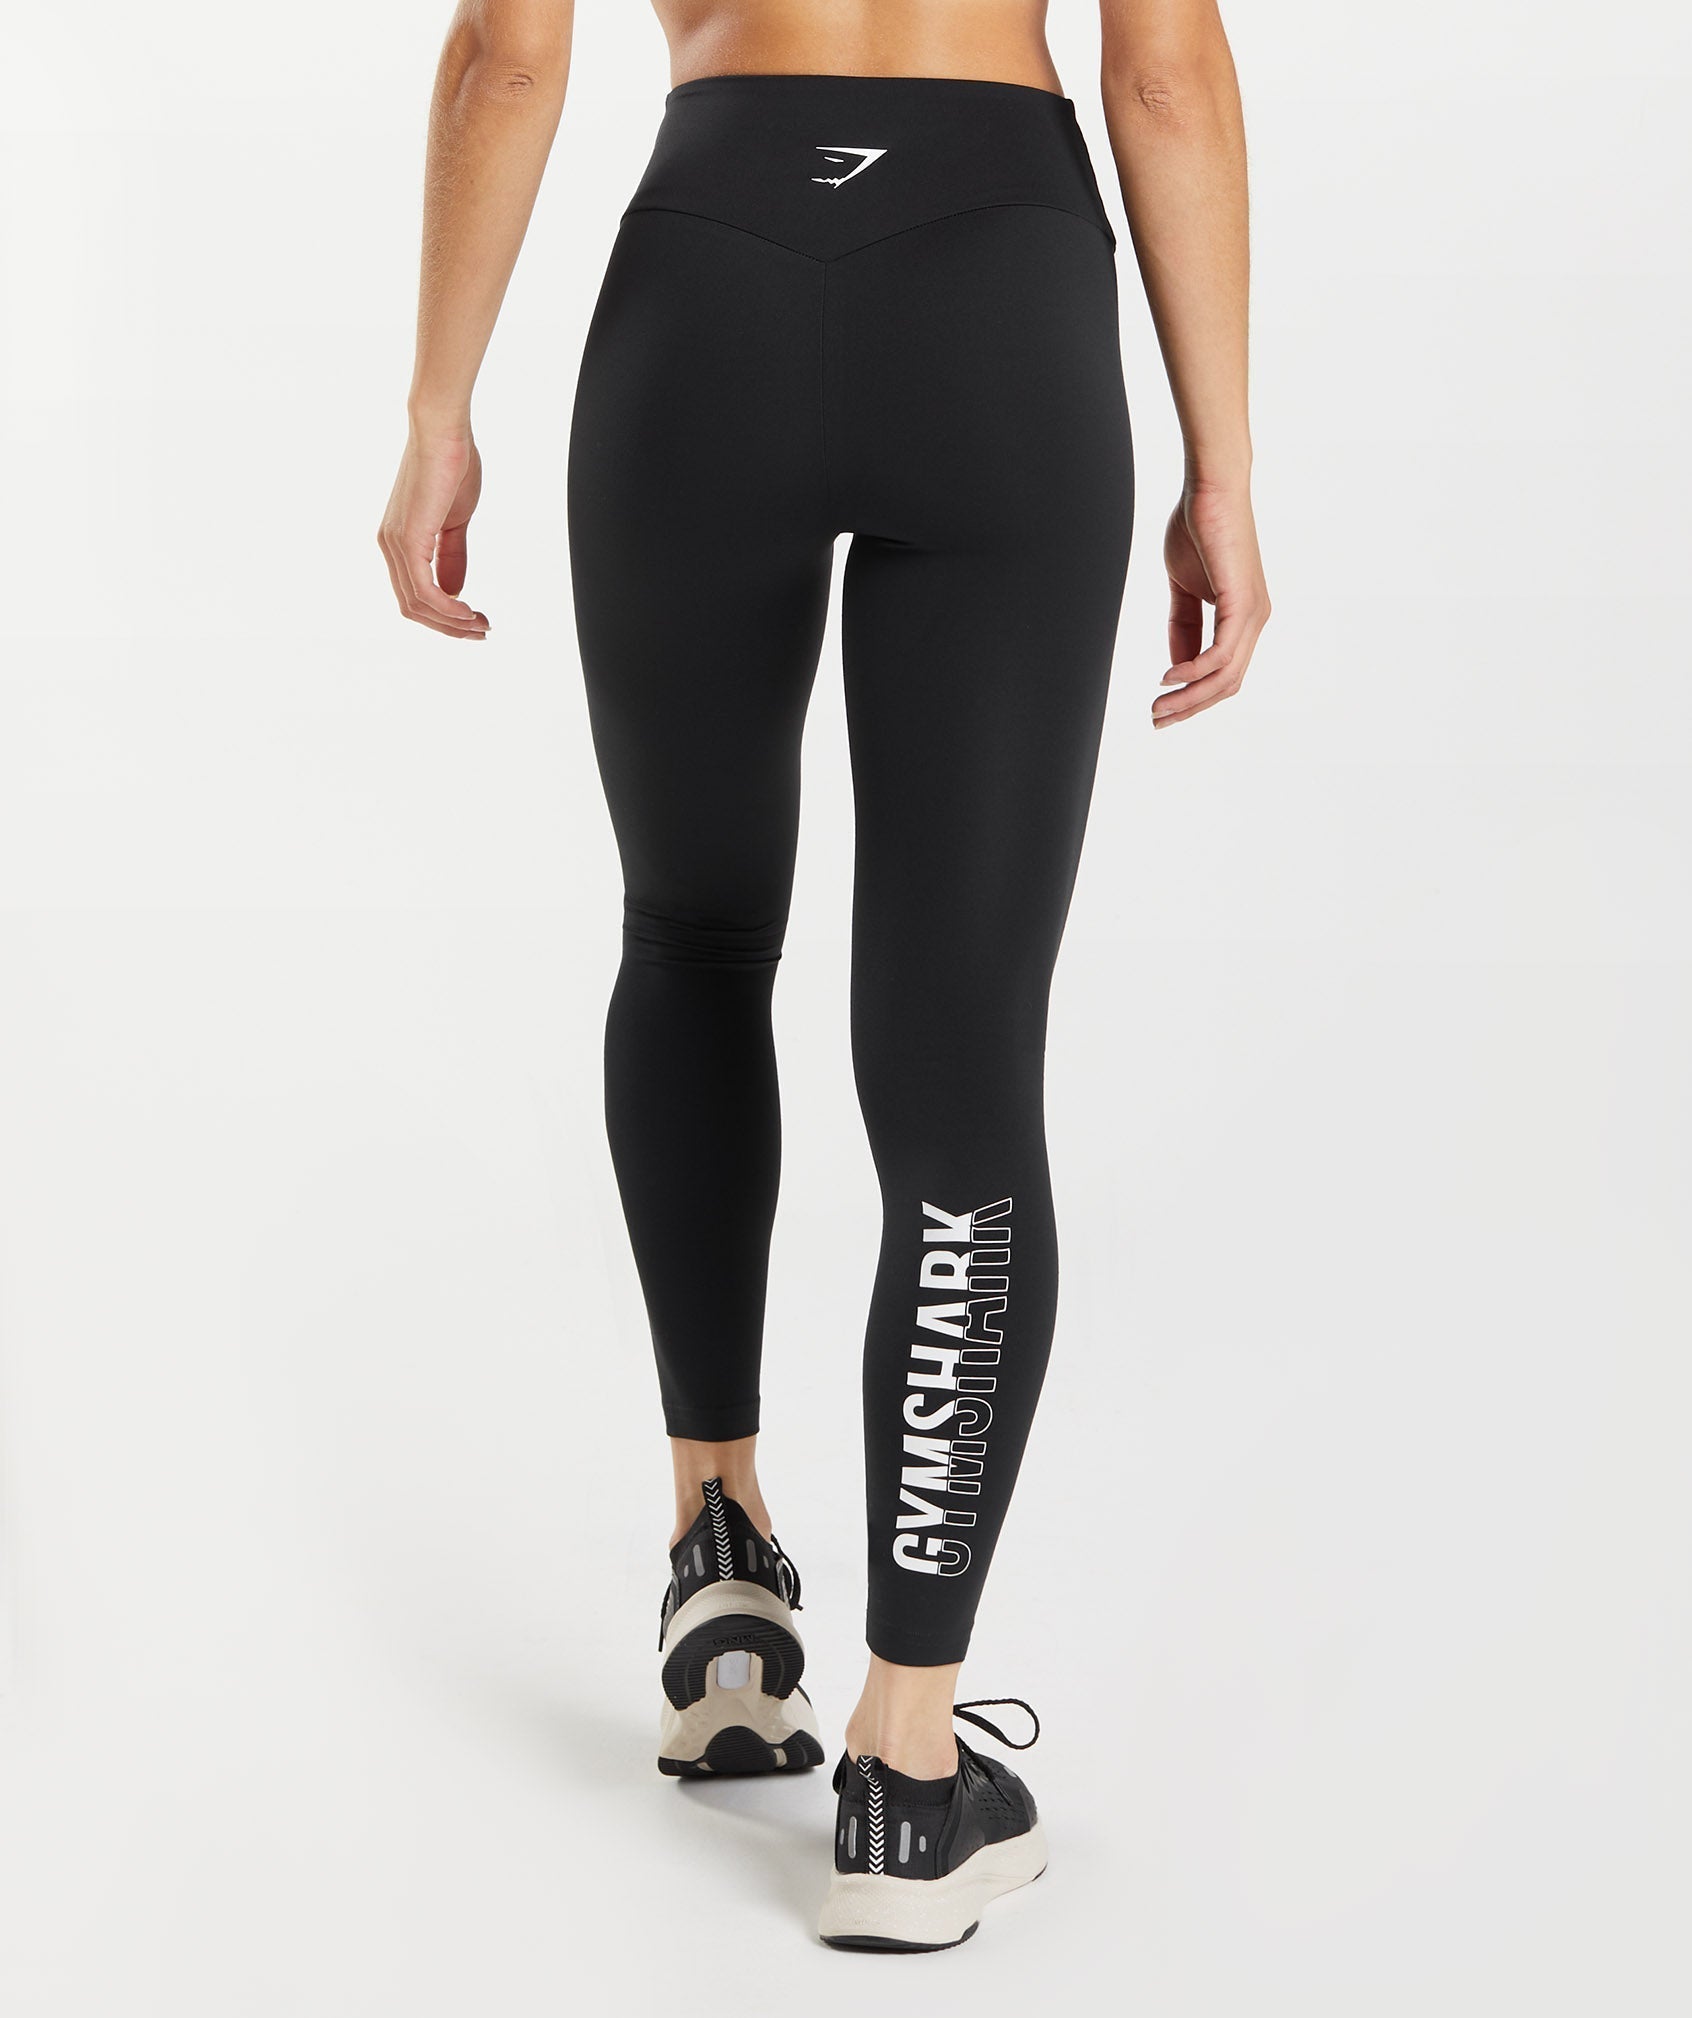 NWT GYMSHARK Legacy Fitness Black leggings womens size XS